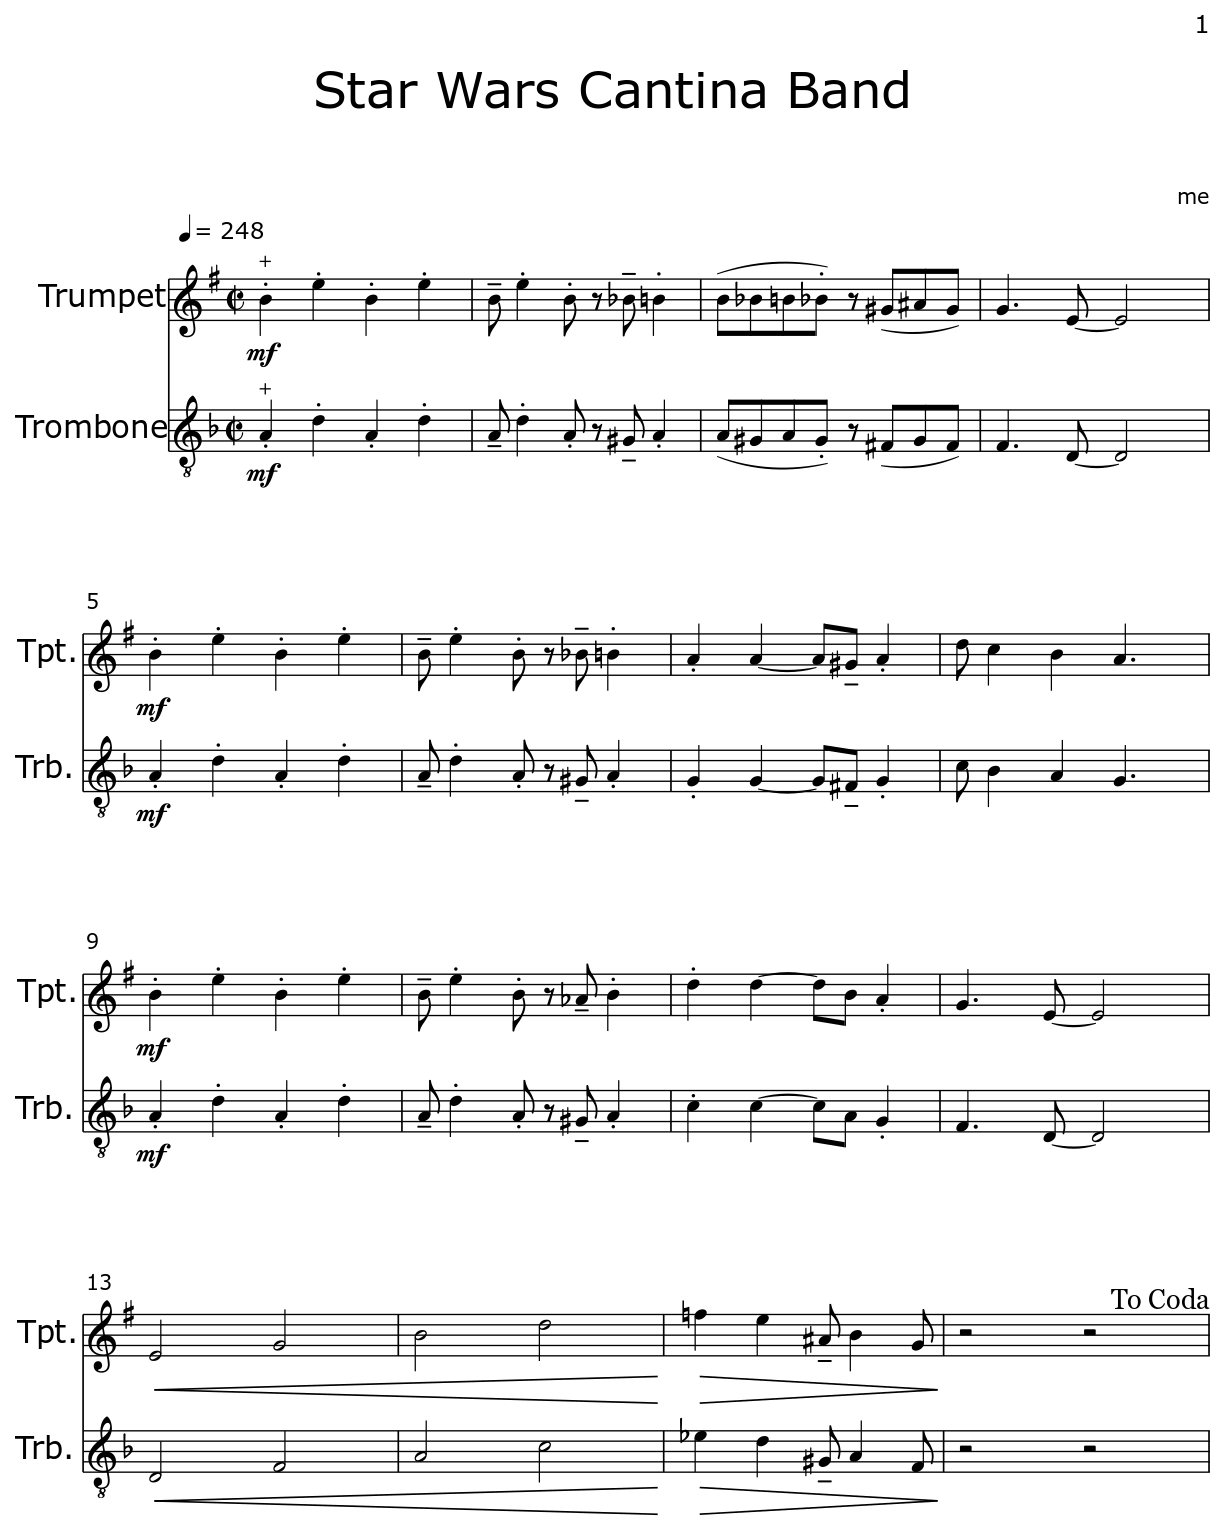 Star Wars Cantina Band - Sheet music for Trumpet, Trombone